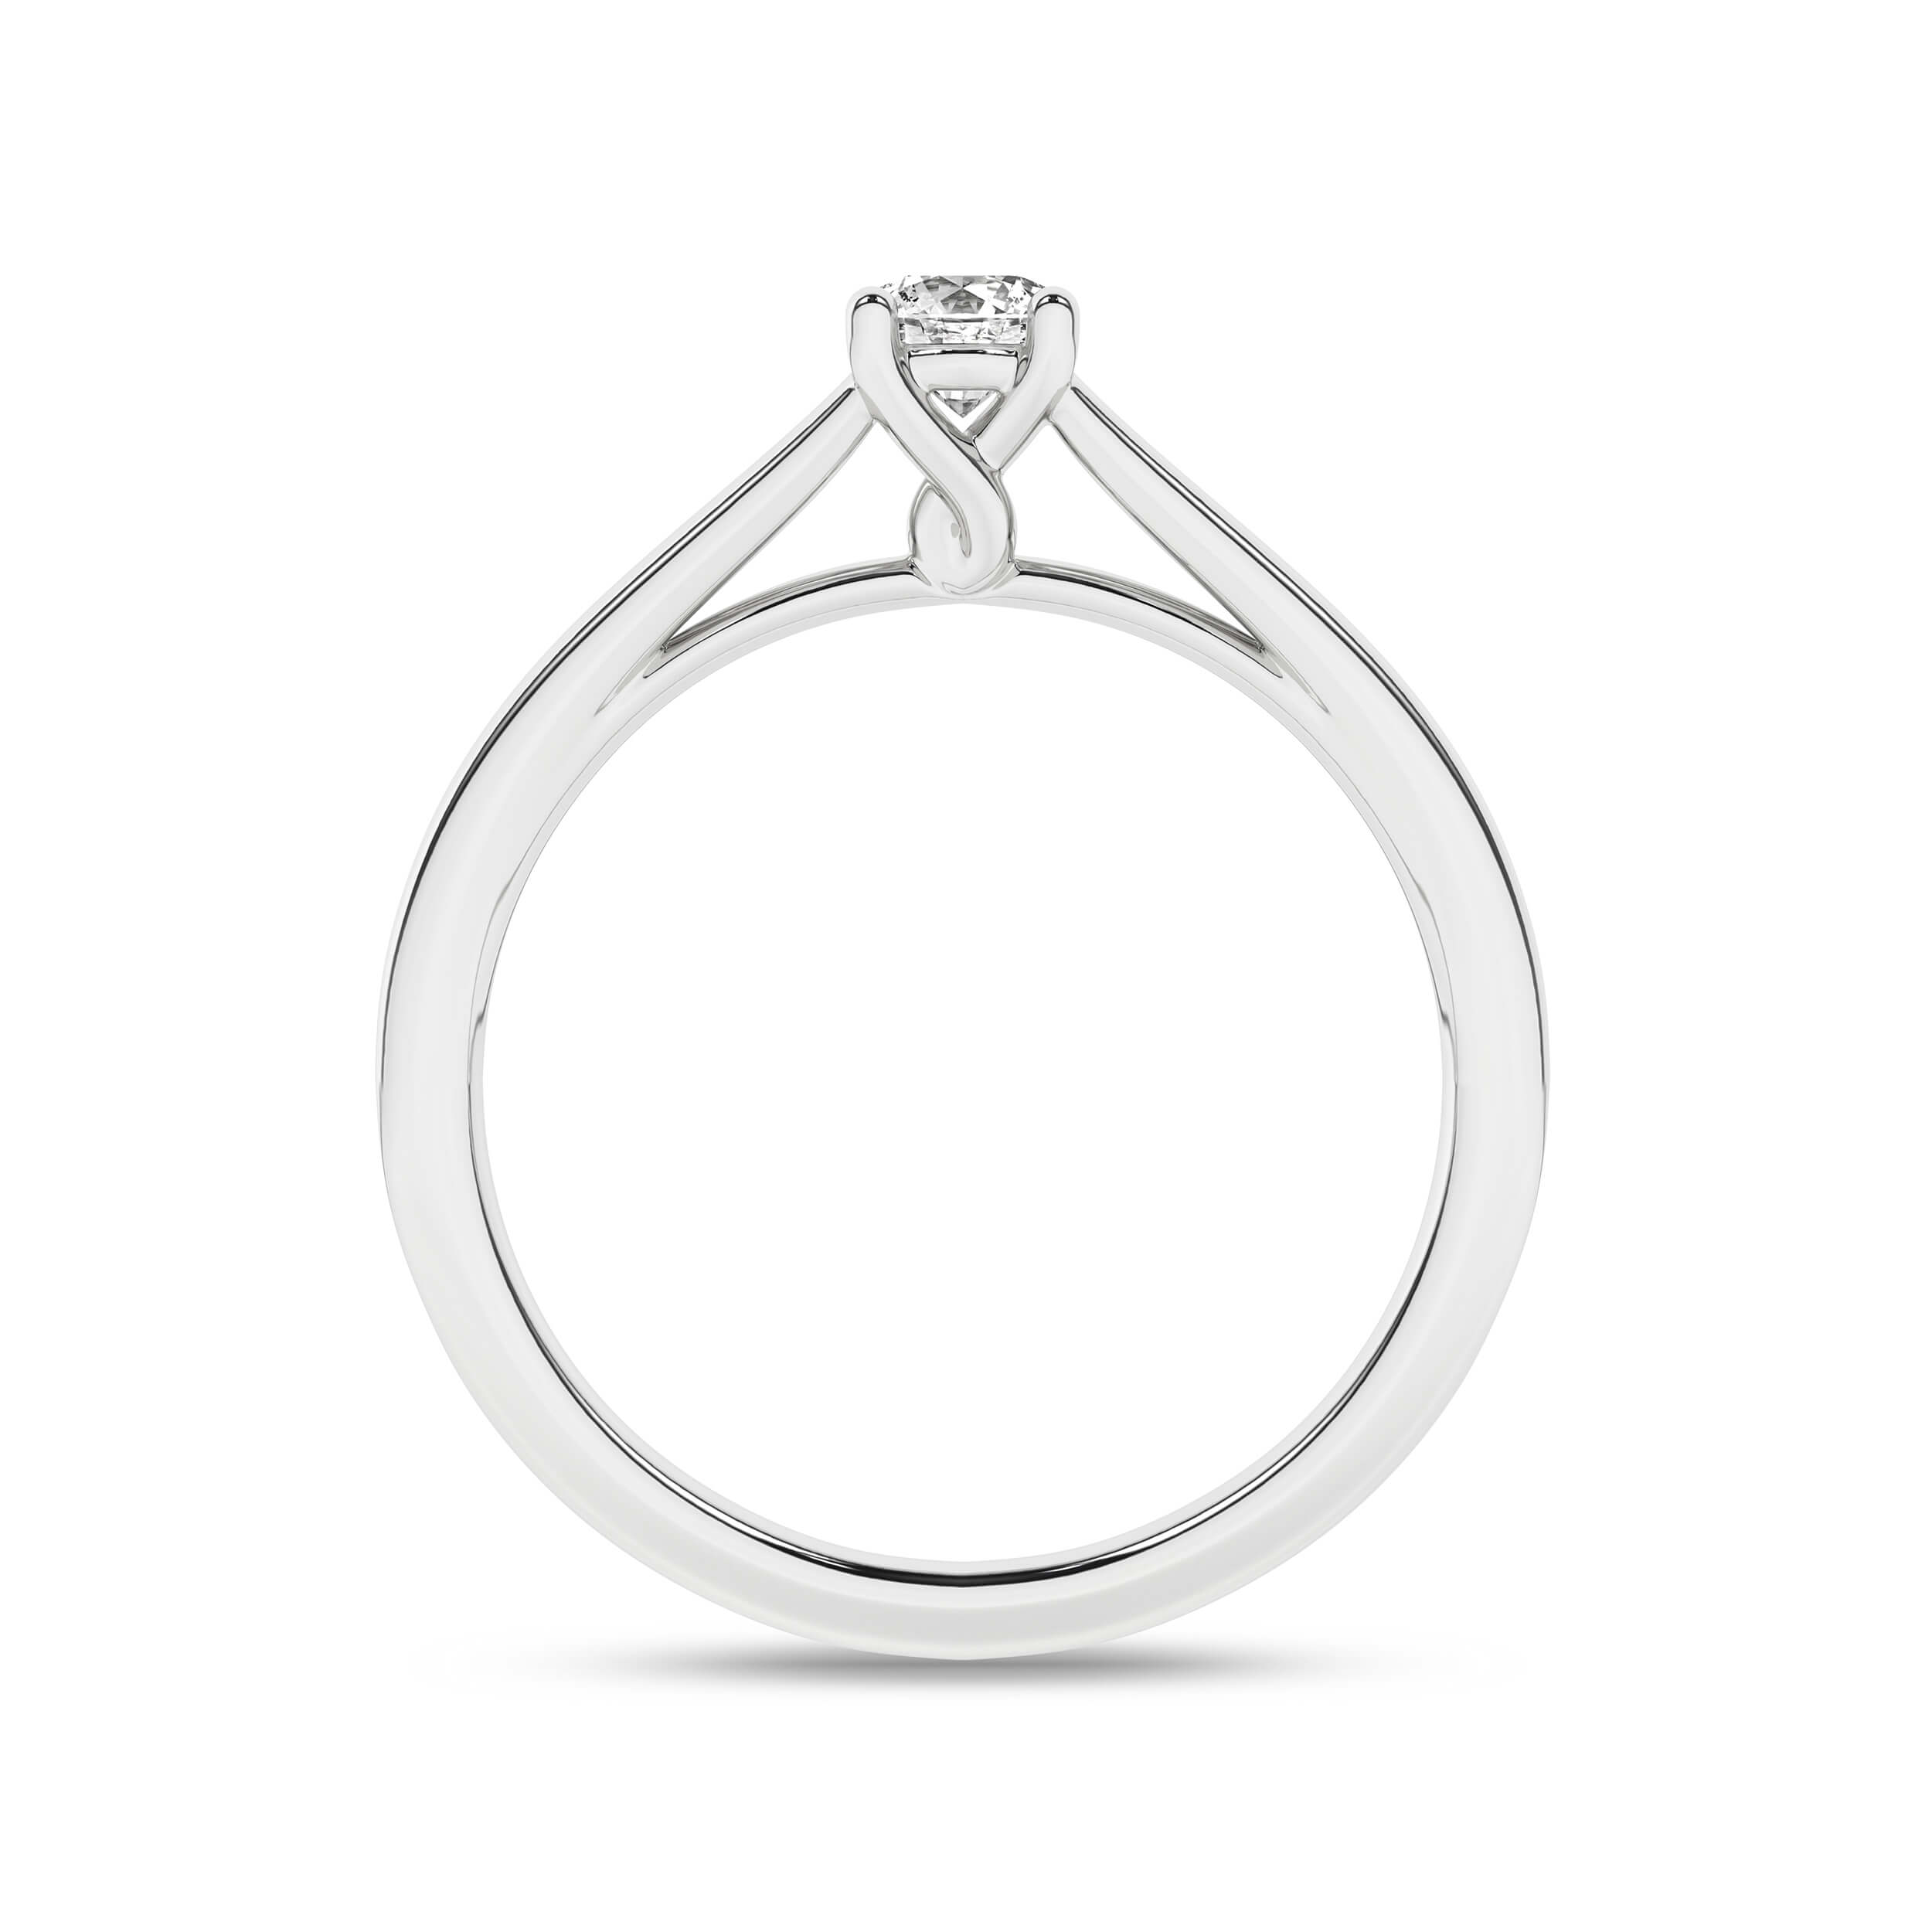 Inel de logodna din Aur Alb 14K cu Diamant 0.25Ct, articol MSD0471EG, previzualizare foto 3